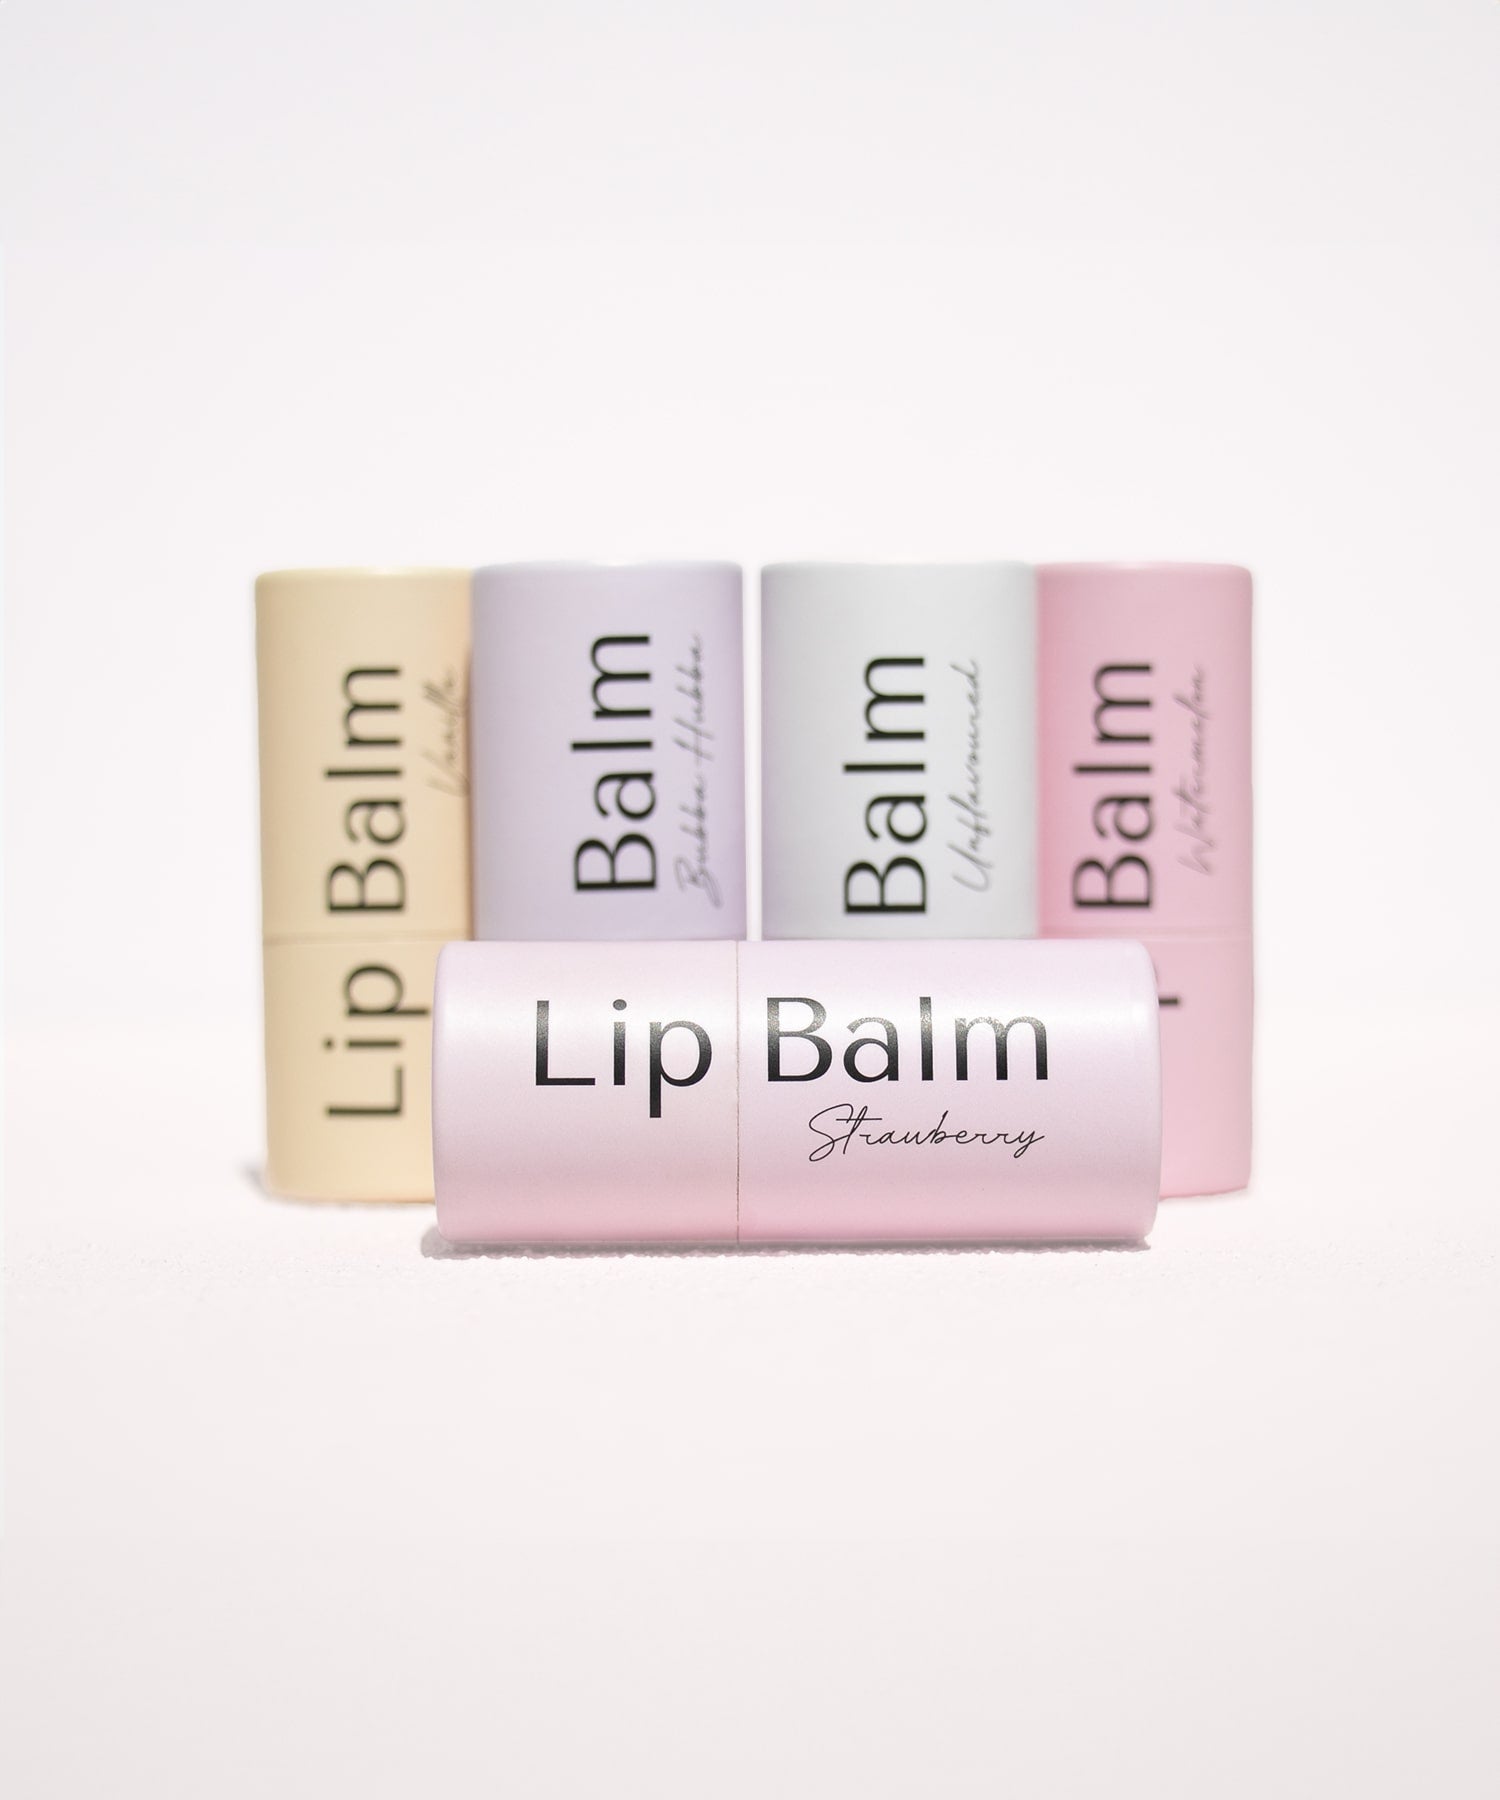 Lip Balm 5-Pack (1 FREE) - Deep Hydration